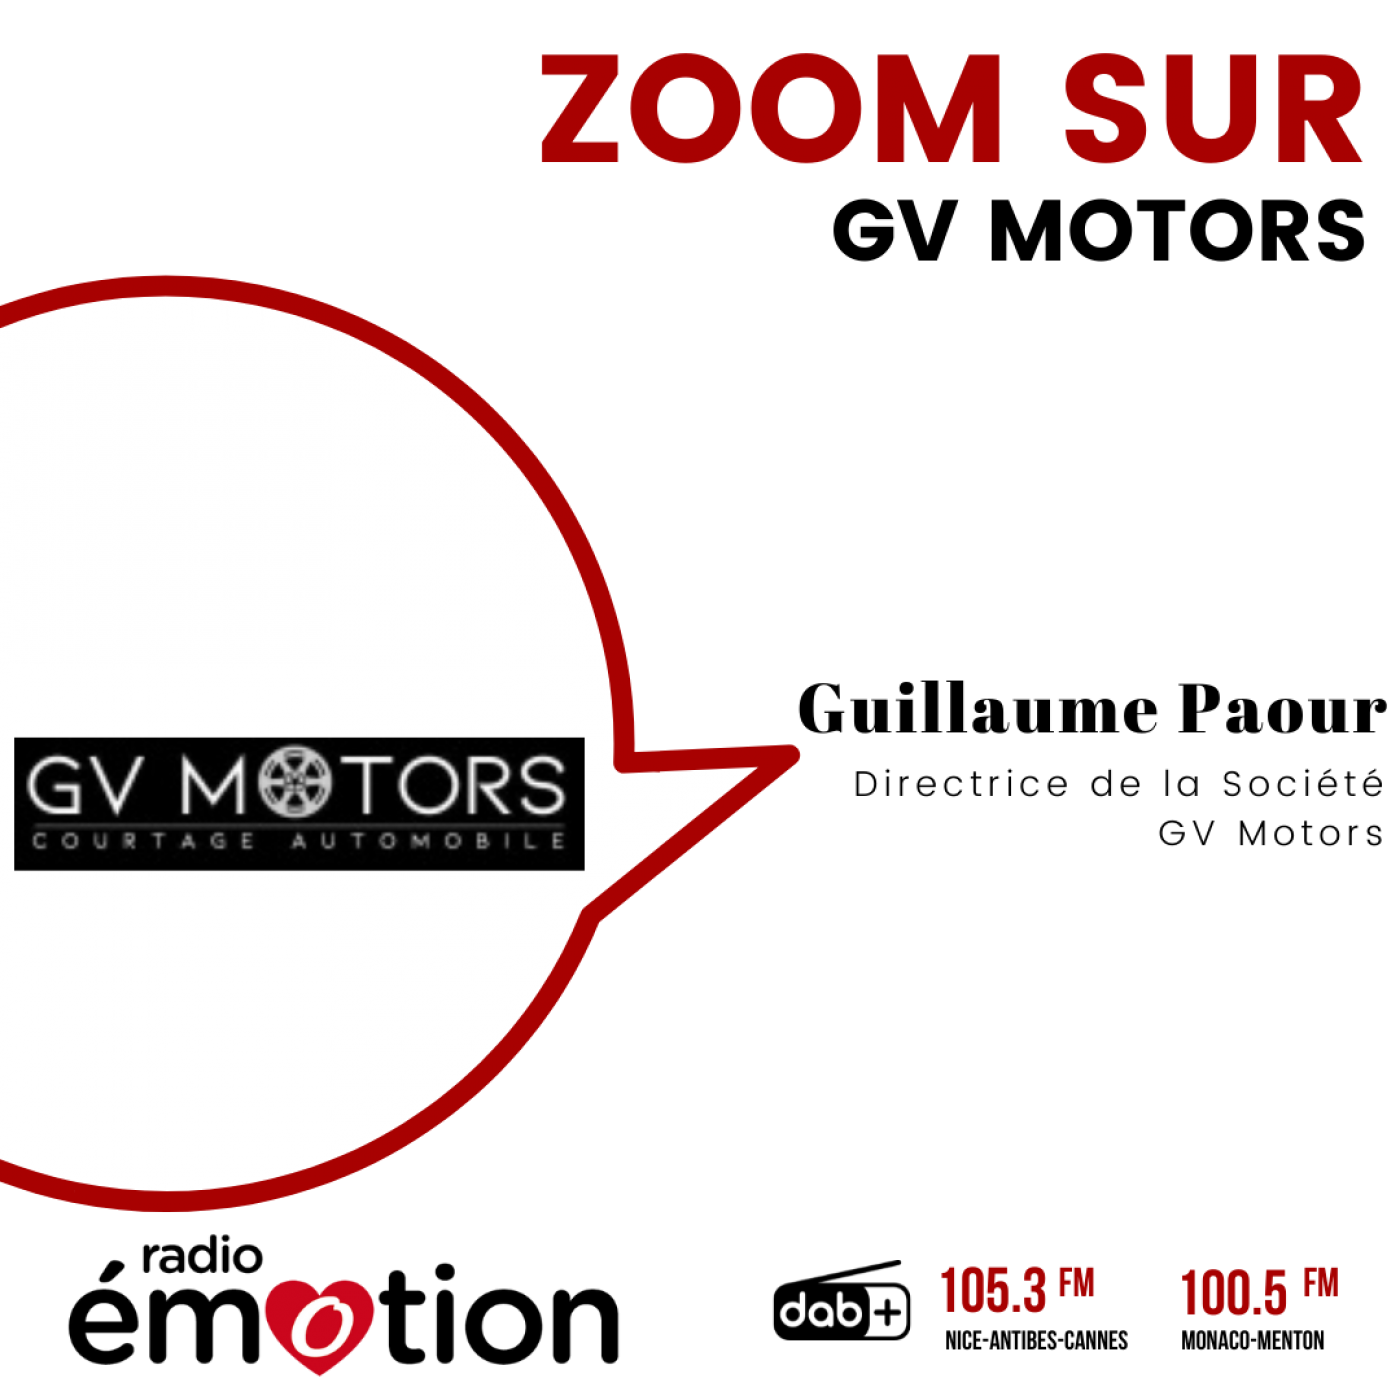 Zoom sur GV Motors